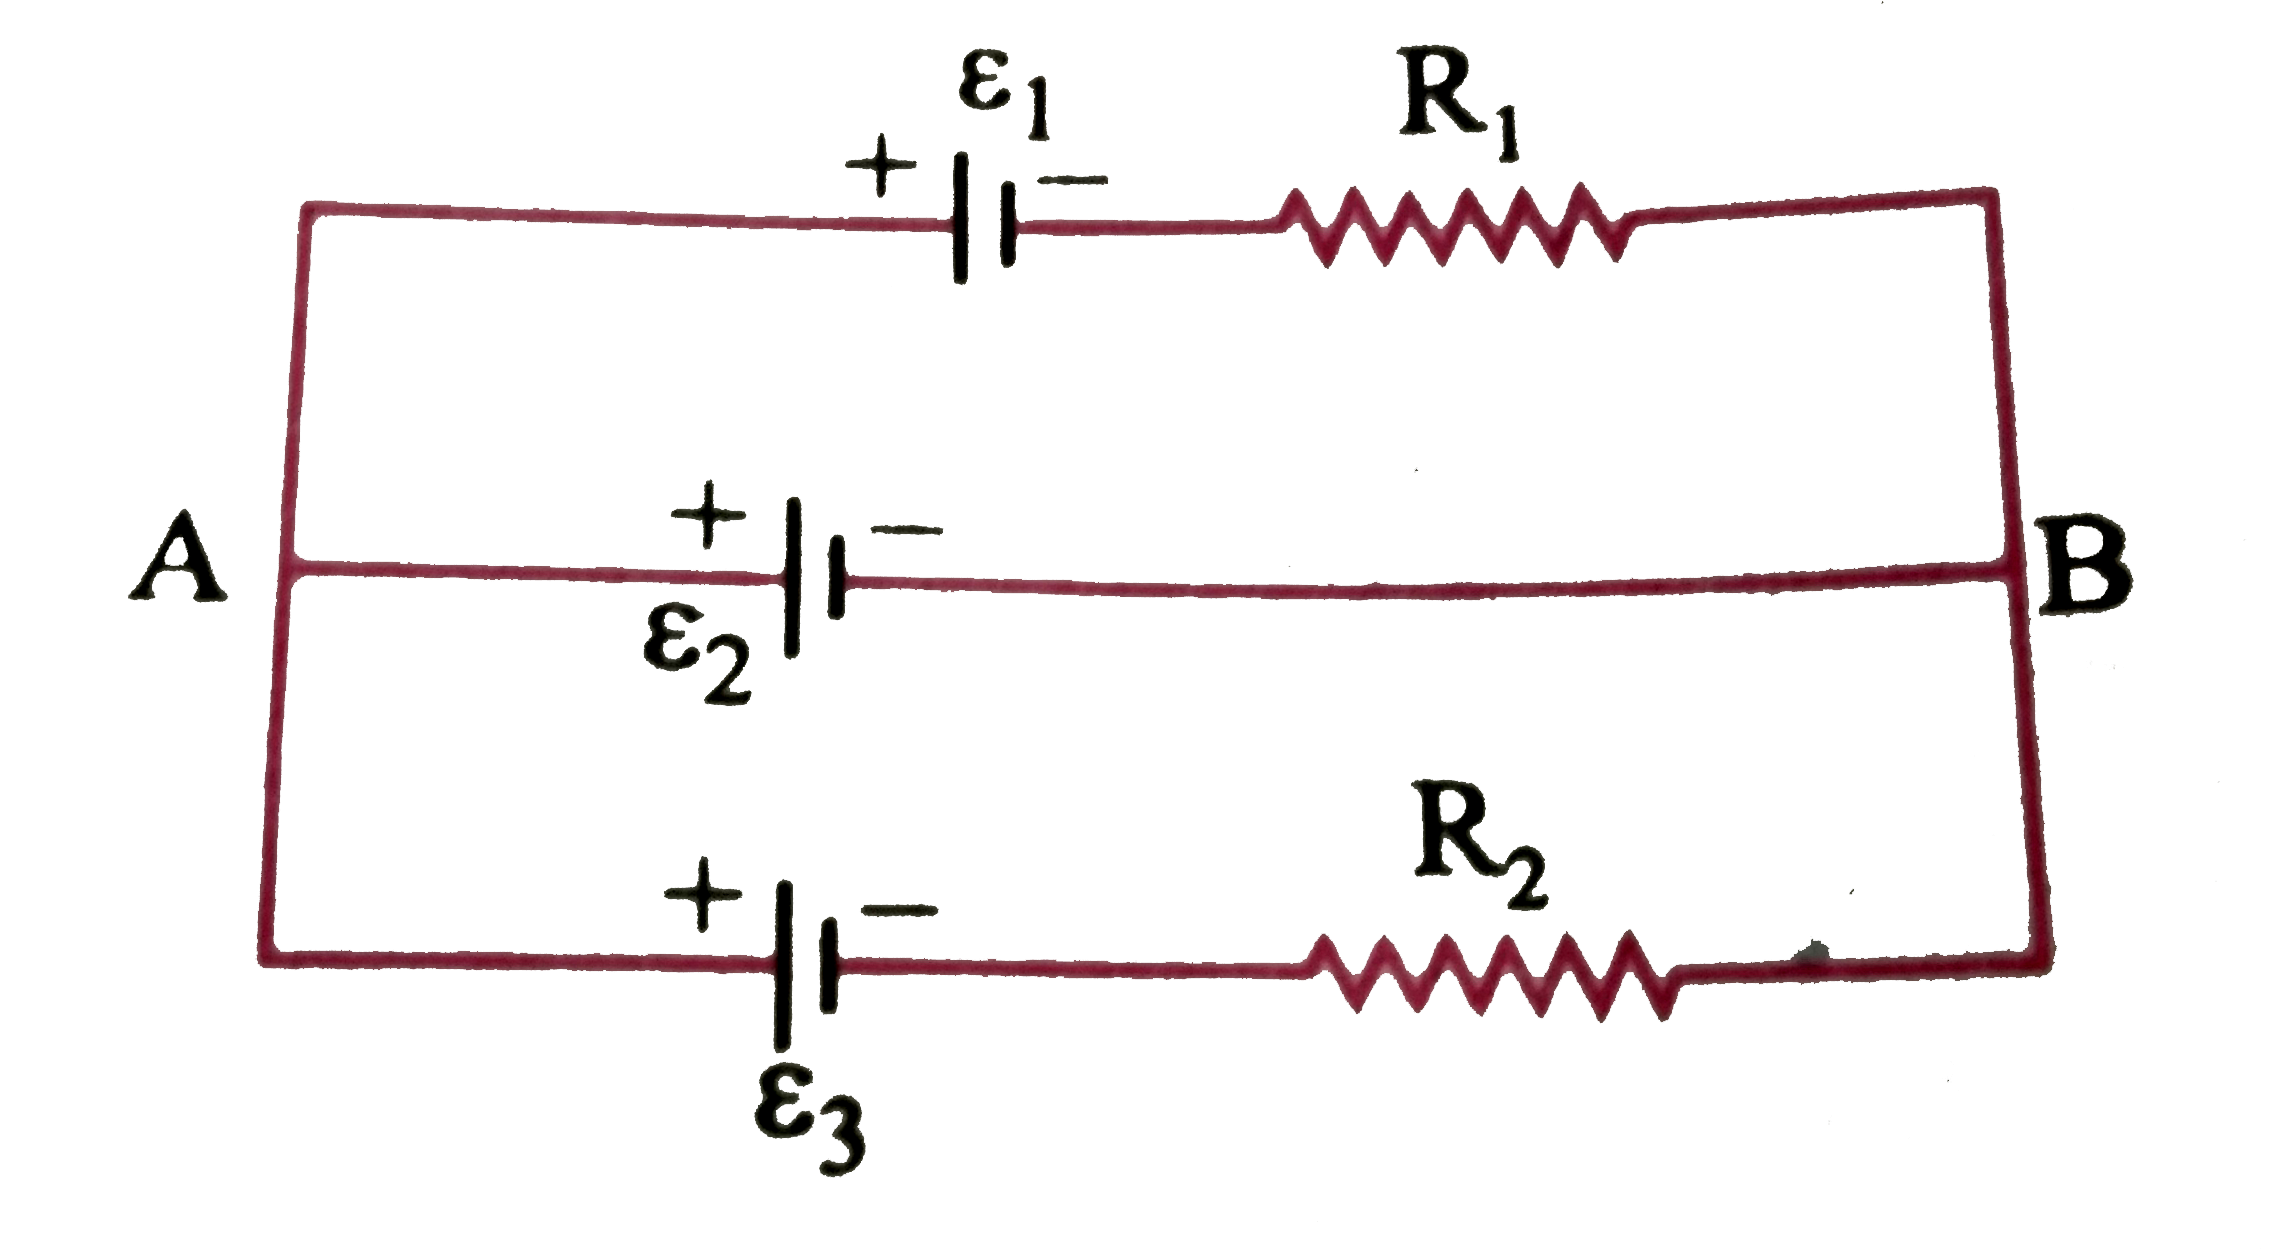 नीचे  दिए गये  चित्र में epsilon(1) = epsilon(2) = epsilon(3) = 2    वाल्ट तथा R(1) = R(2) = 4   ओम । A  और B के बीच  सेल epsilon(2) से बहने  वाली धारा  है -